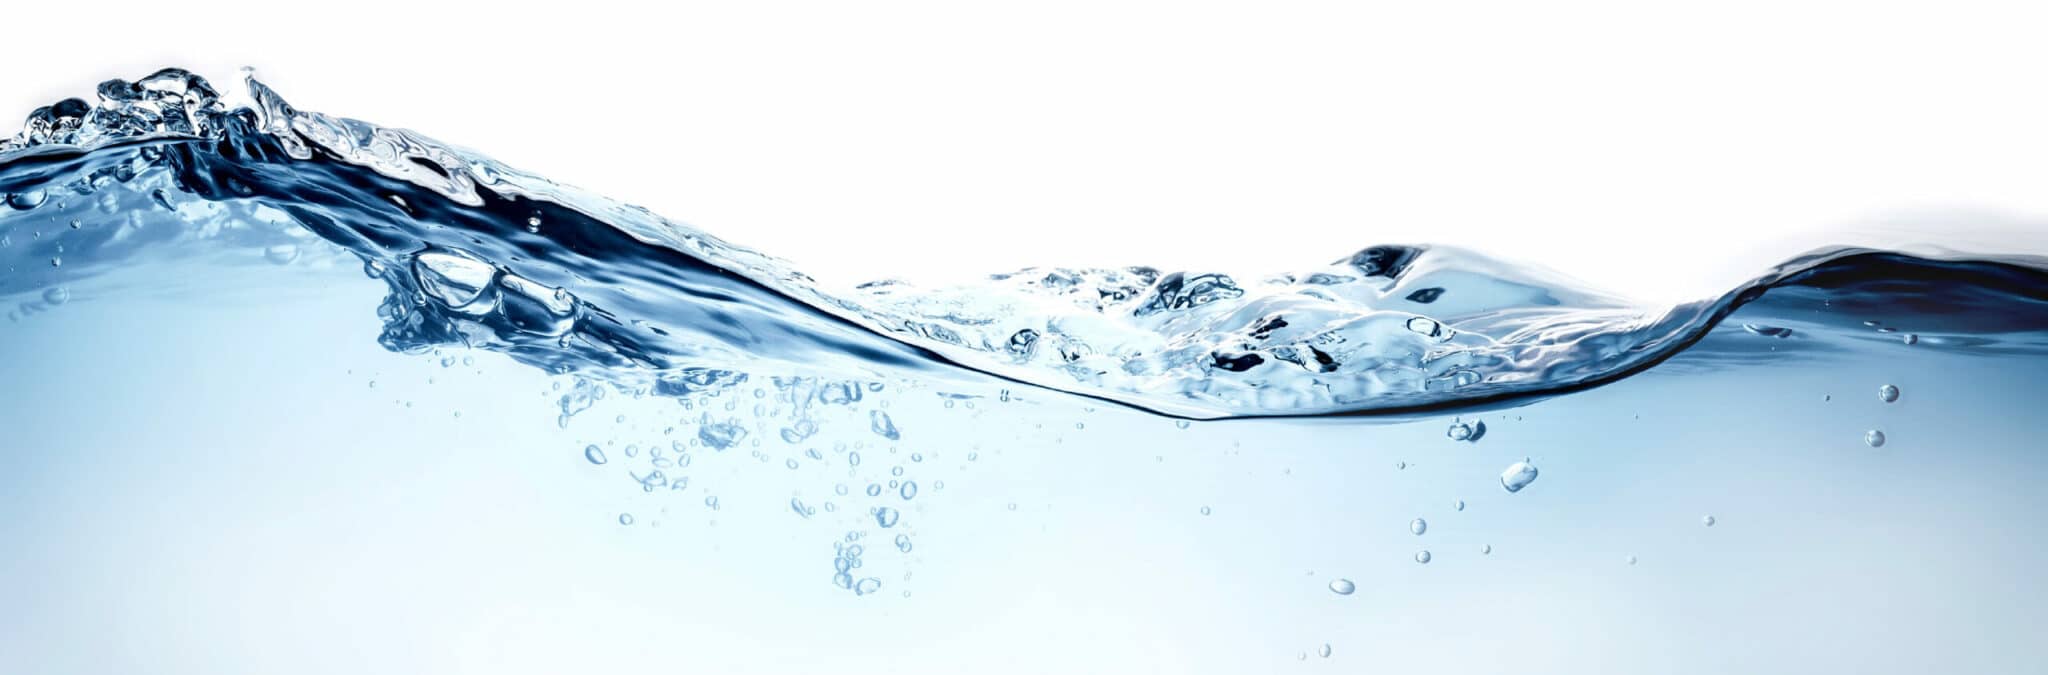 L’eau adoucie :  4 mythes démystifiés